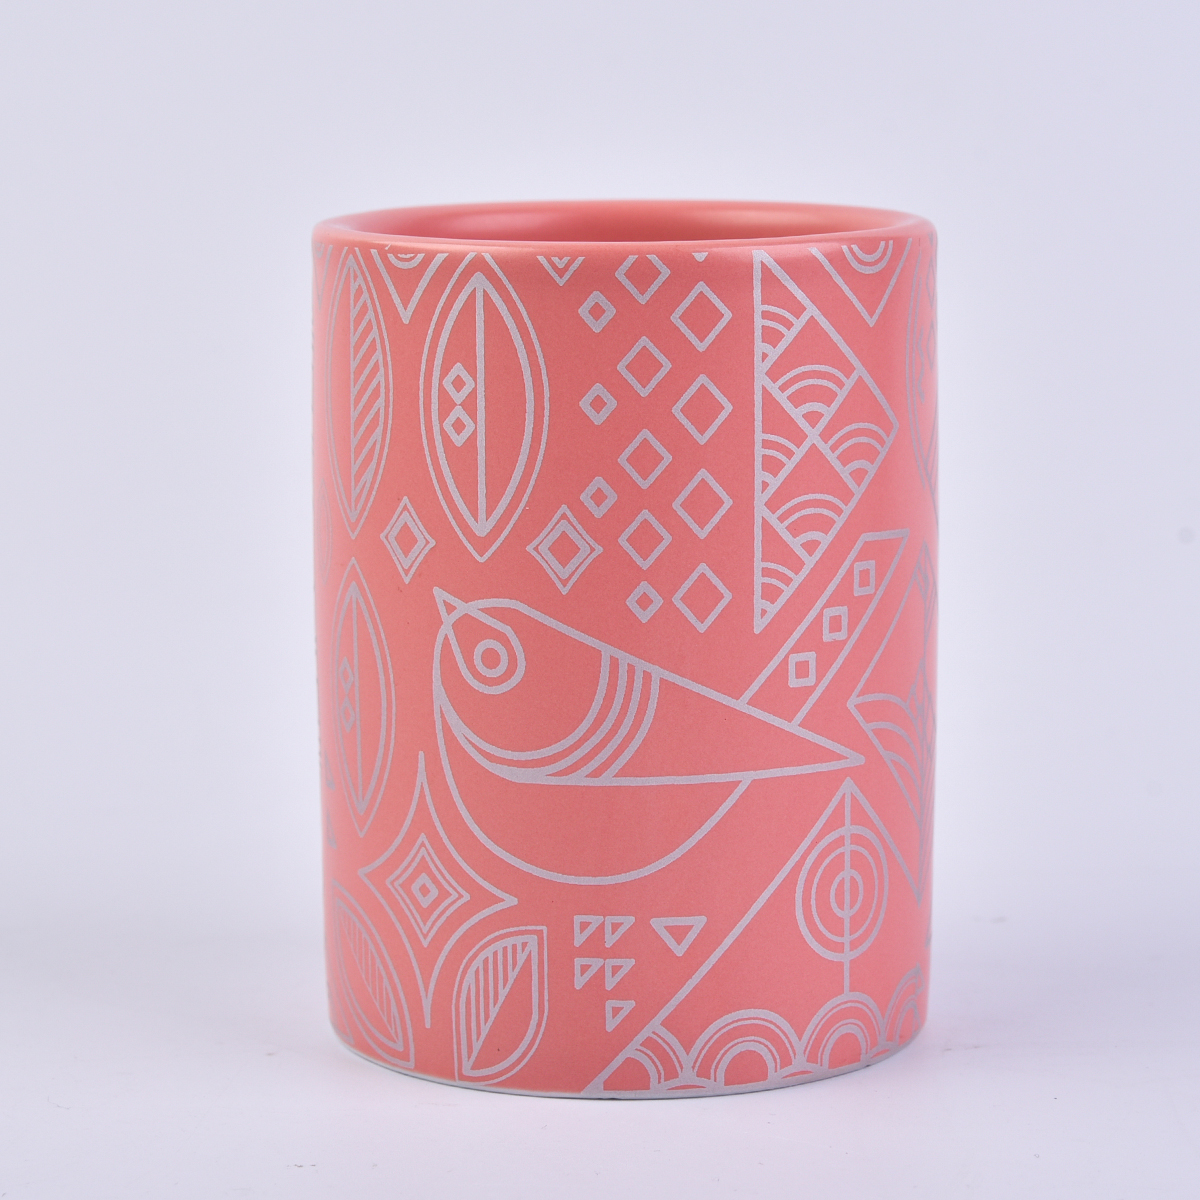 Matte pink ceramic candle jars